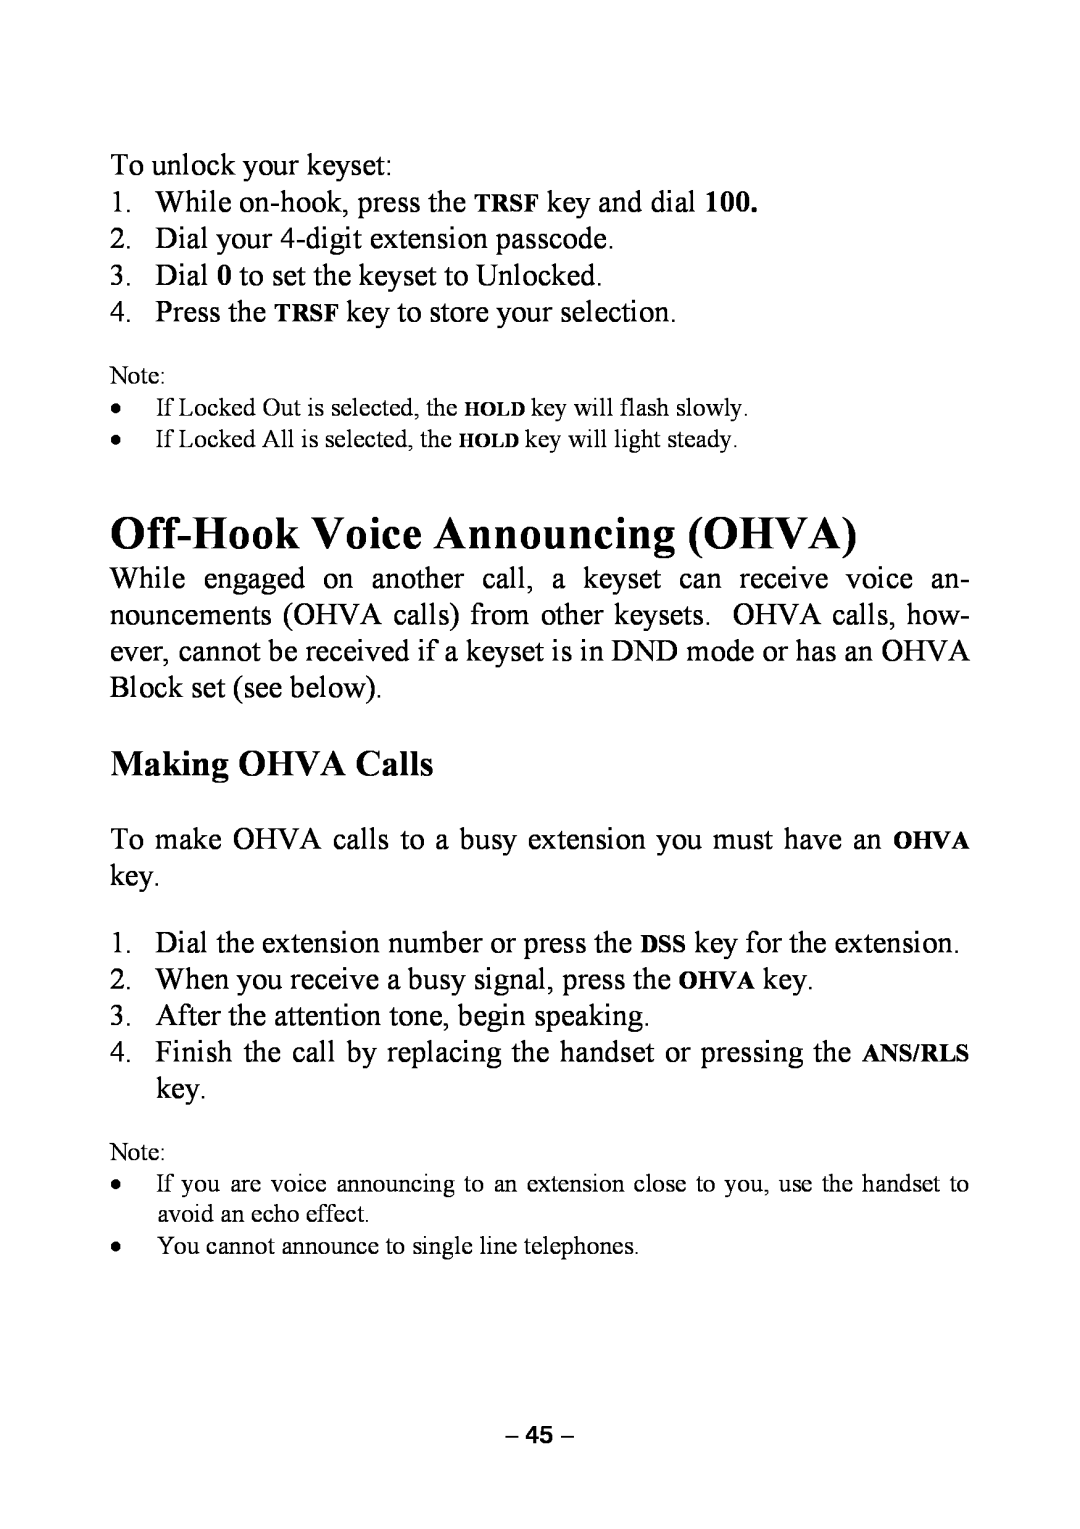 Samsung DCS KEYSET manual Off-Hook Voice Announcing OHVA, Making OHVA Calls 